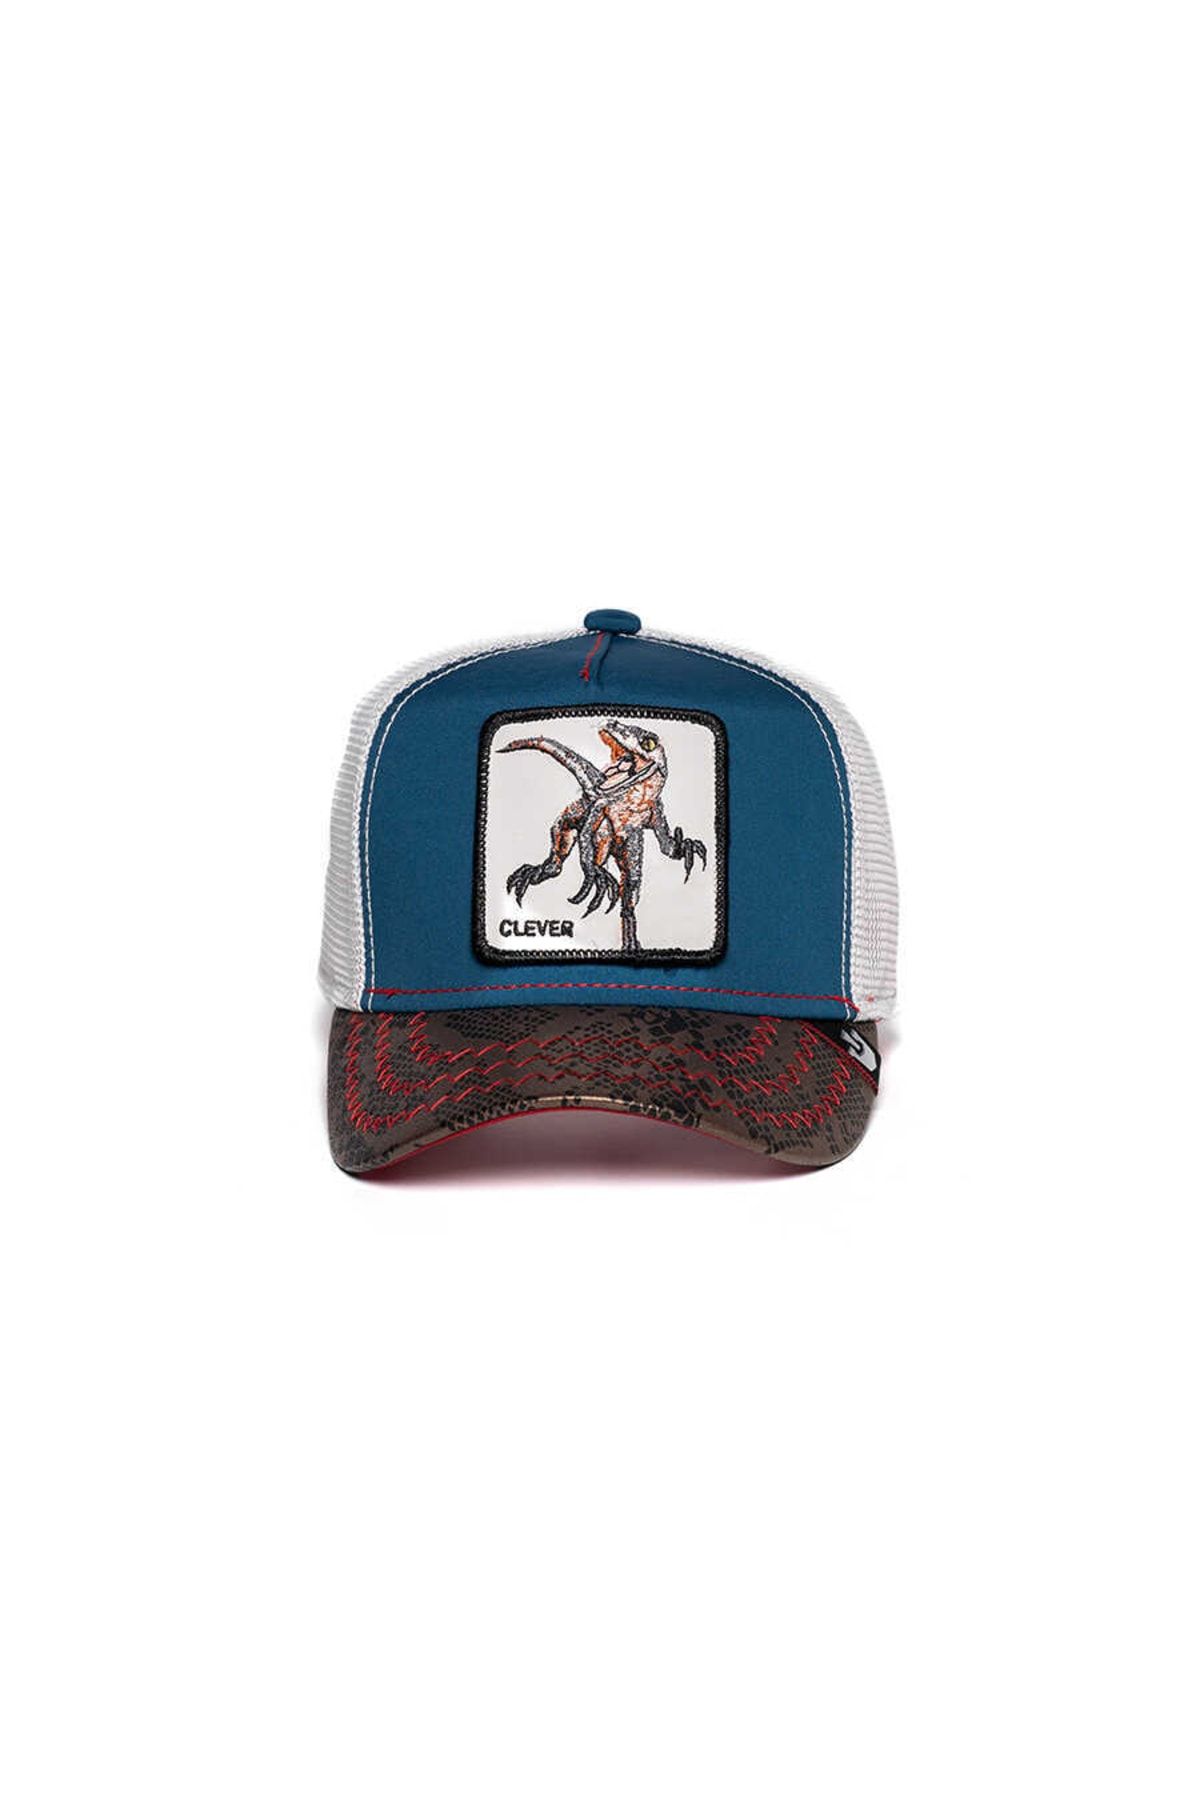 Goorin Bros استاندارد الگوی کلاه رپتور کوچک (دایناسور شکل) 201-0039